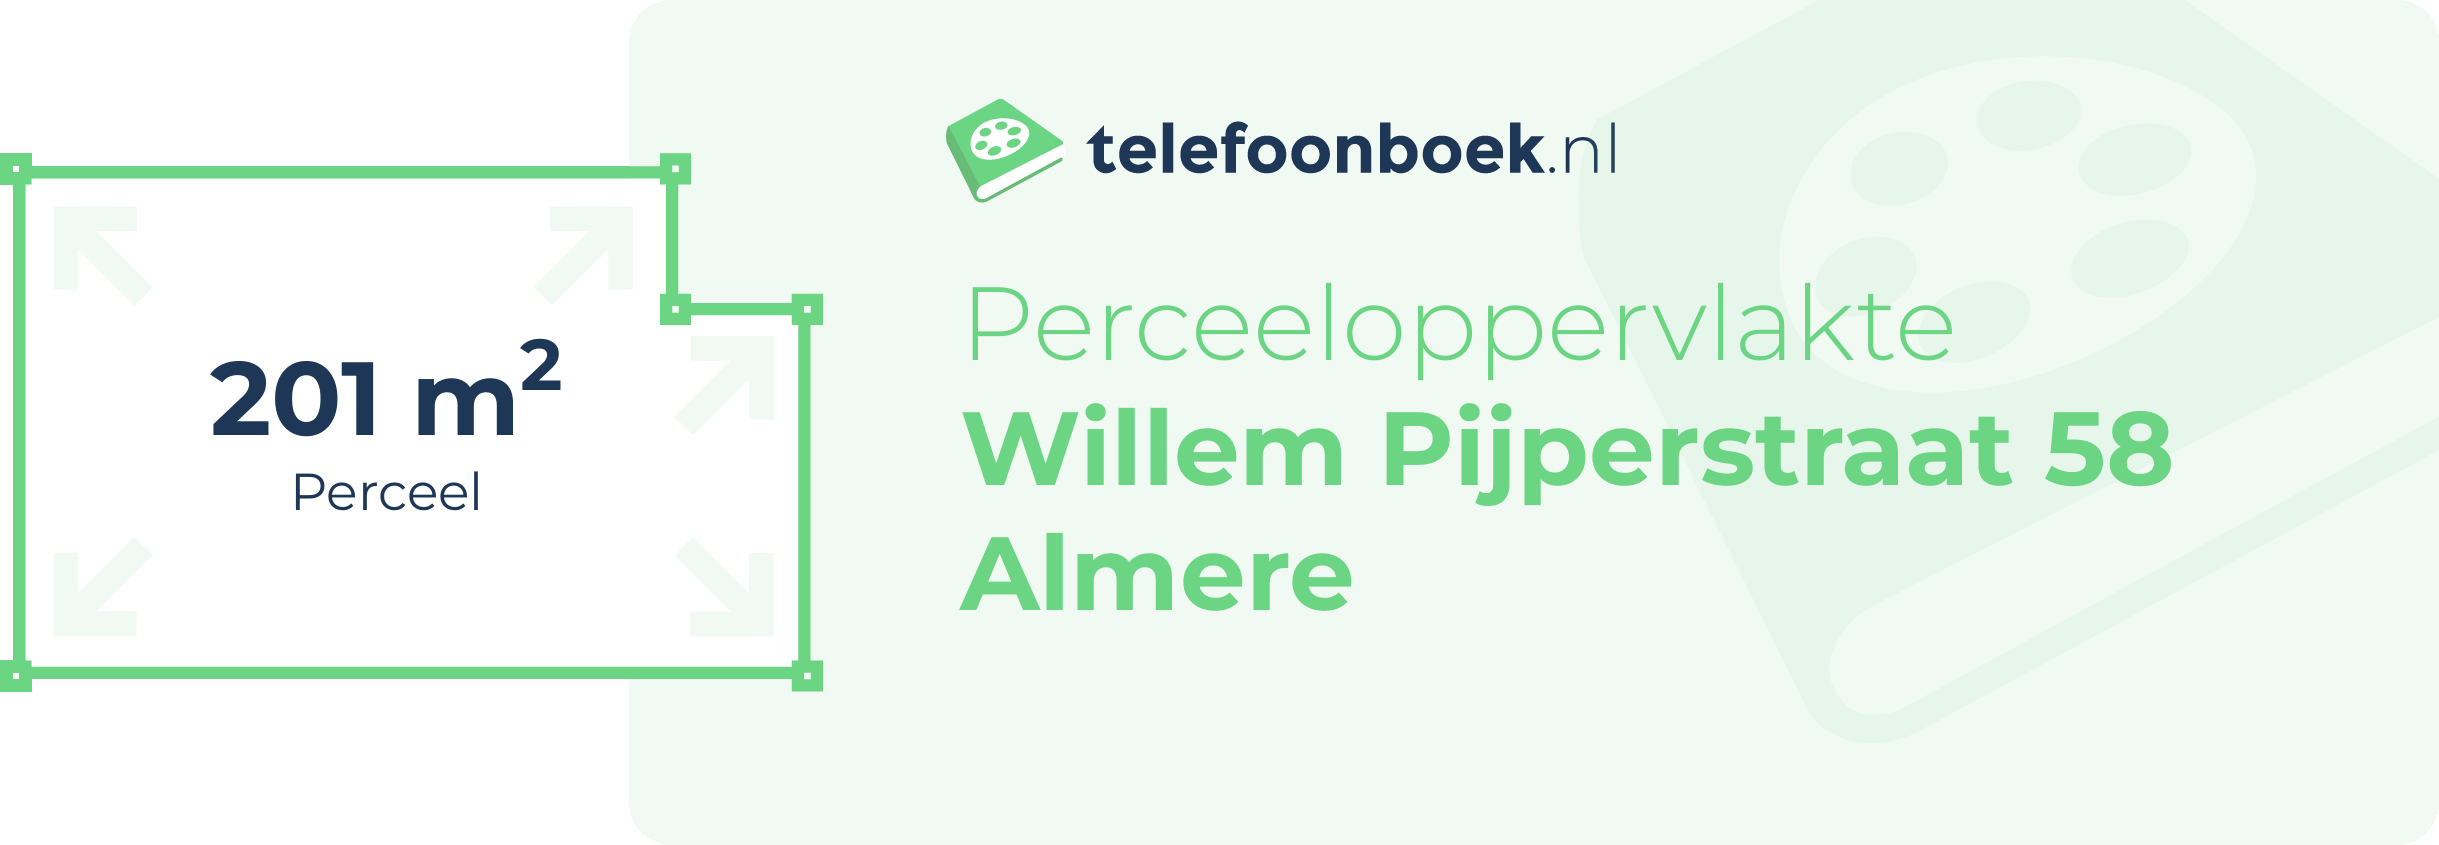 Perceeloppervlakte Willem Pijperstraat 58 Almere